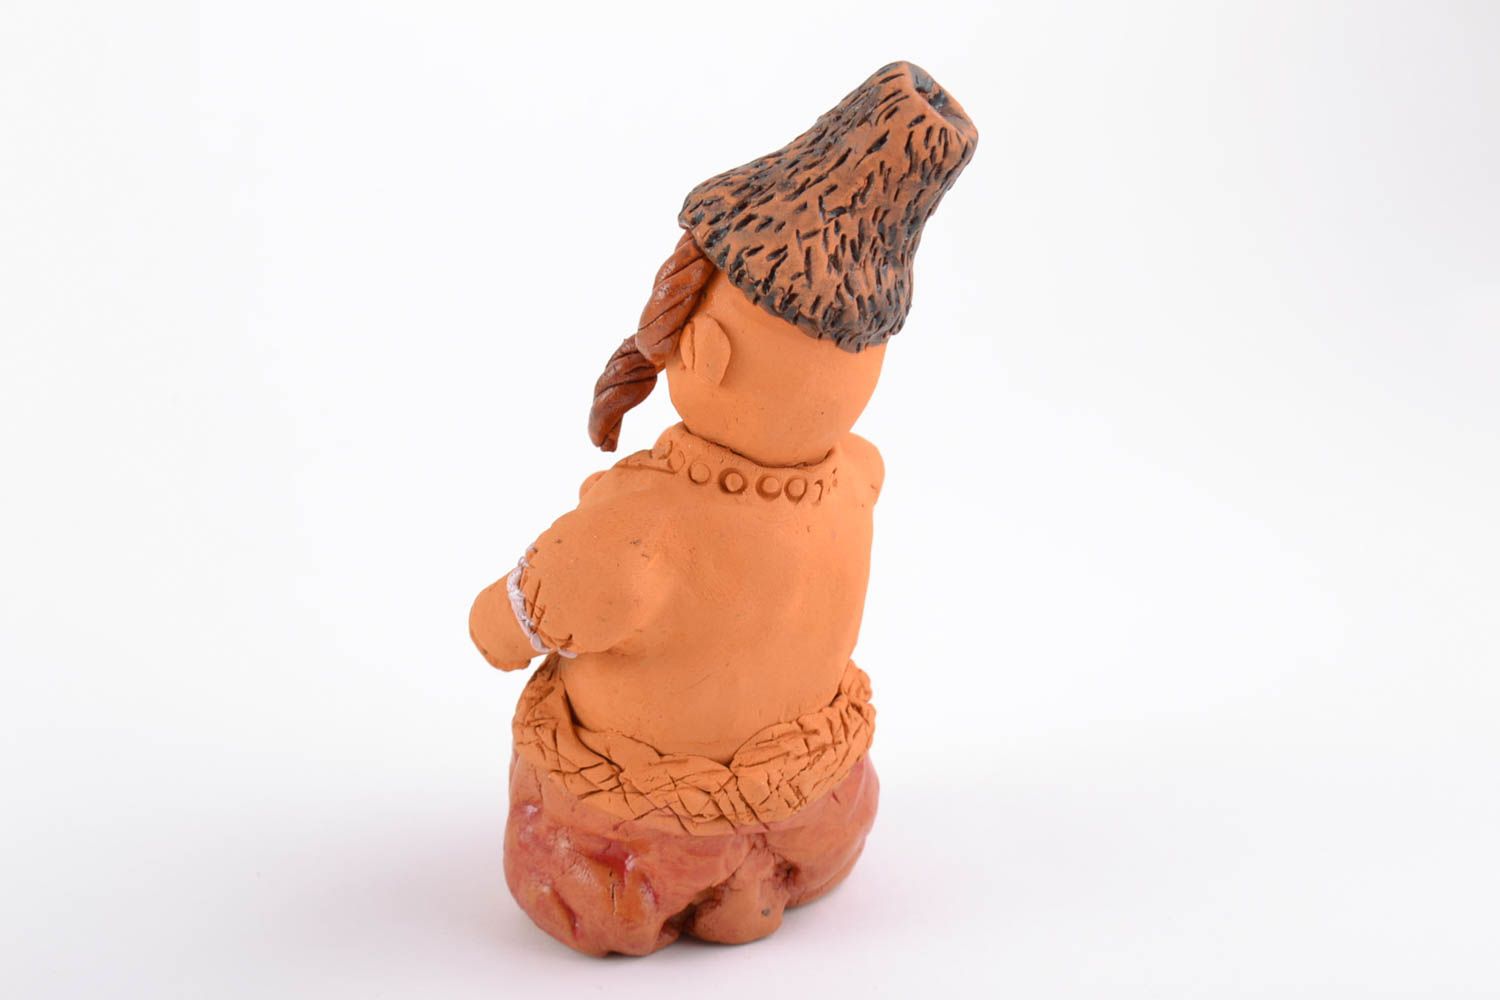 Statuina in ceramica fatta a mano figurina decorativa souvenir di argilla foto 4